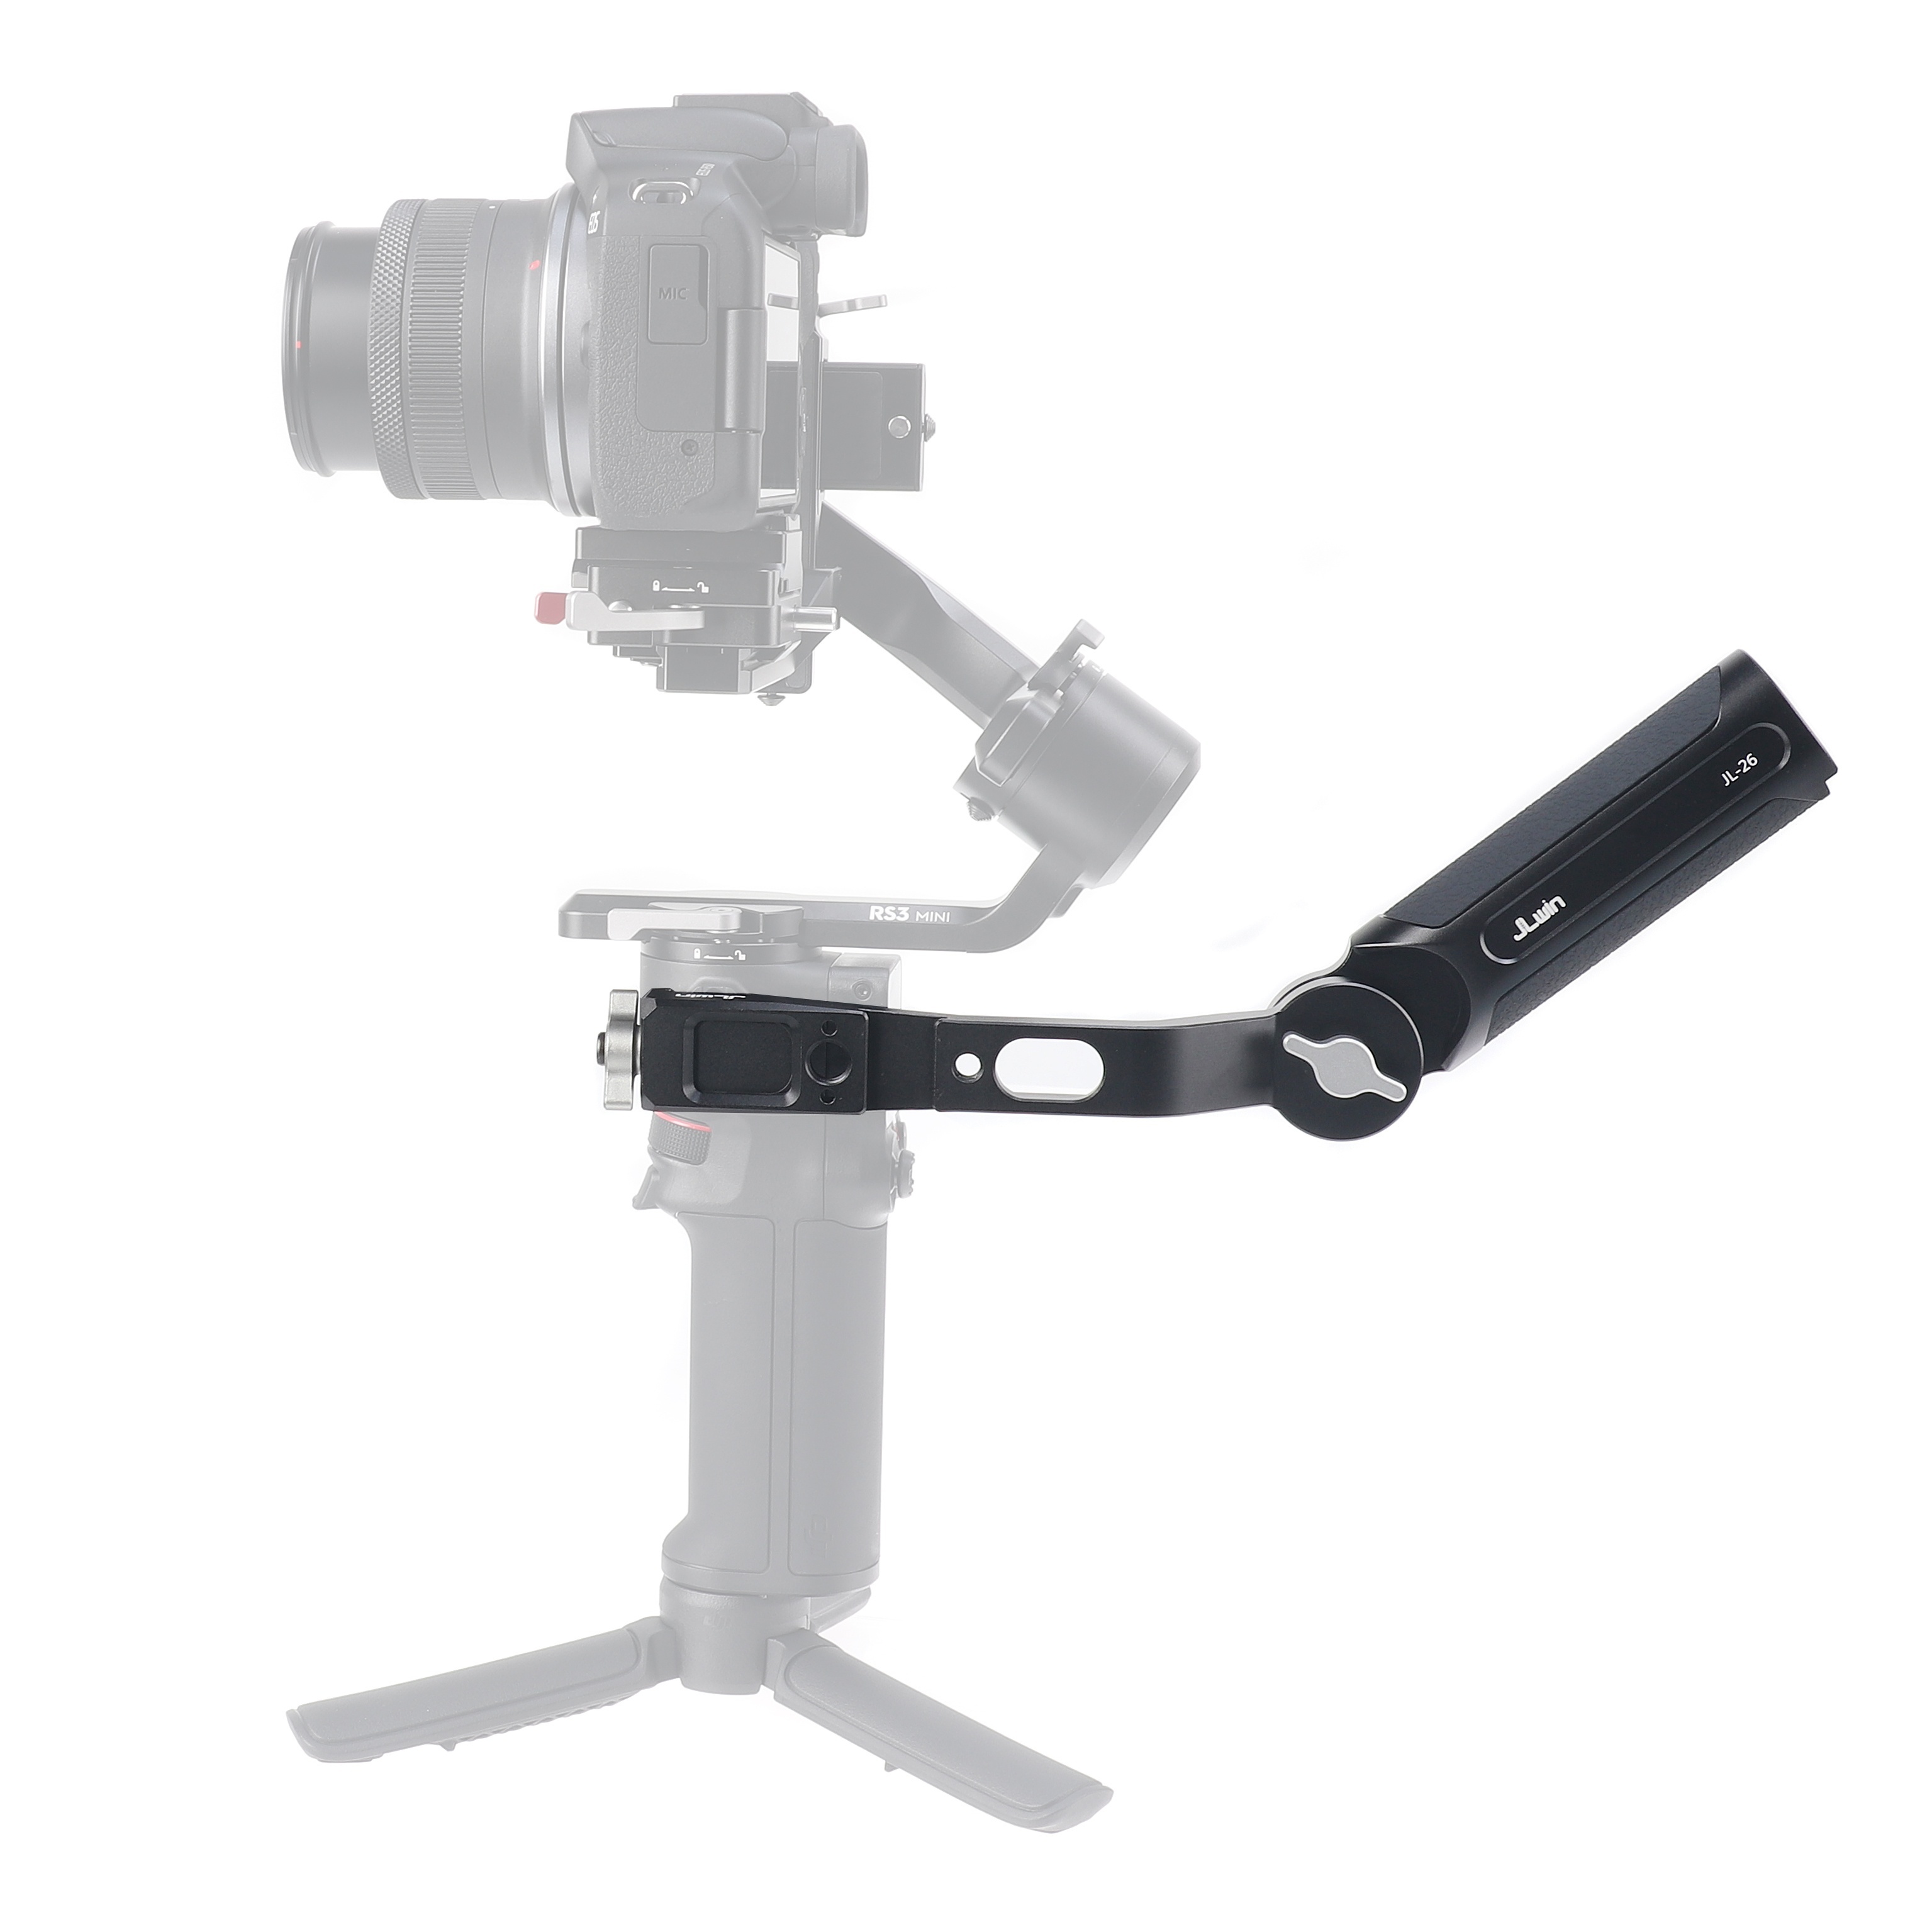 DJI RS 3 Mini Handheld Camera Stabilizer